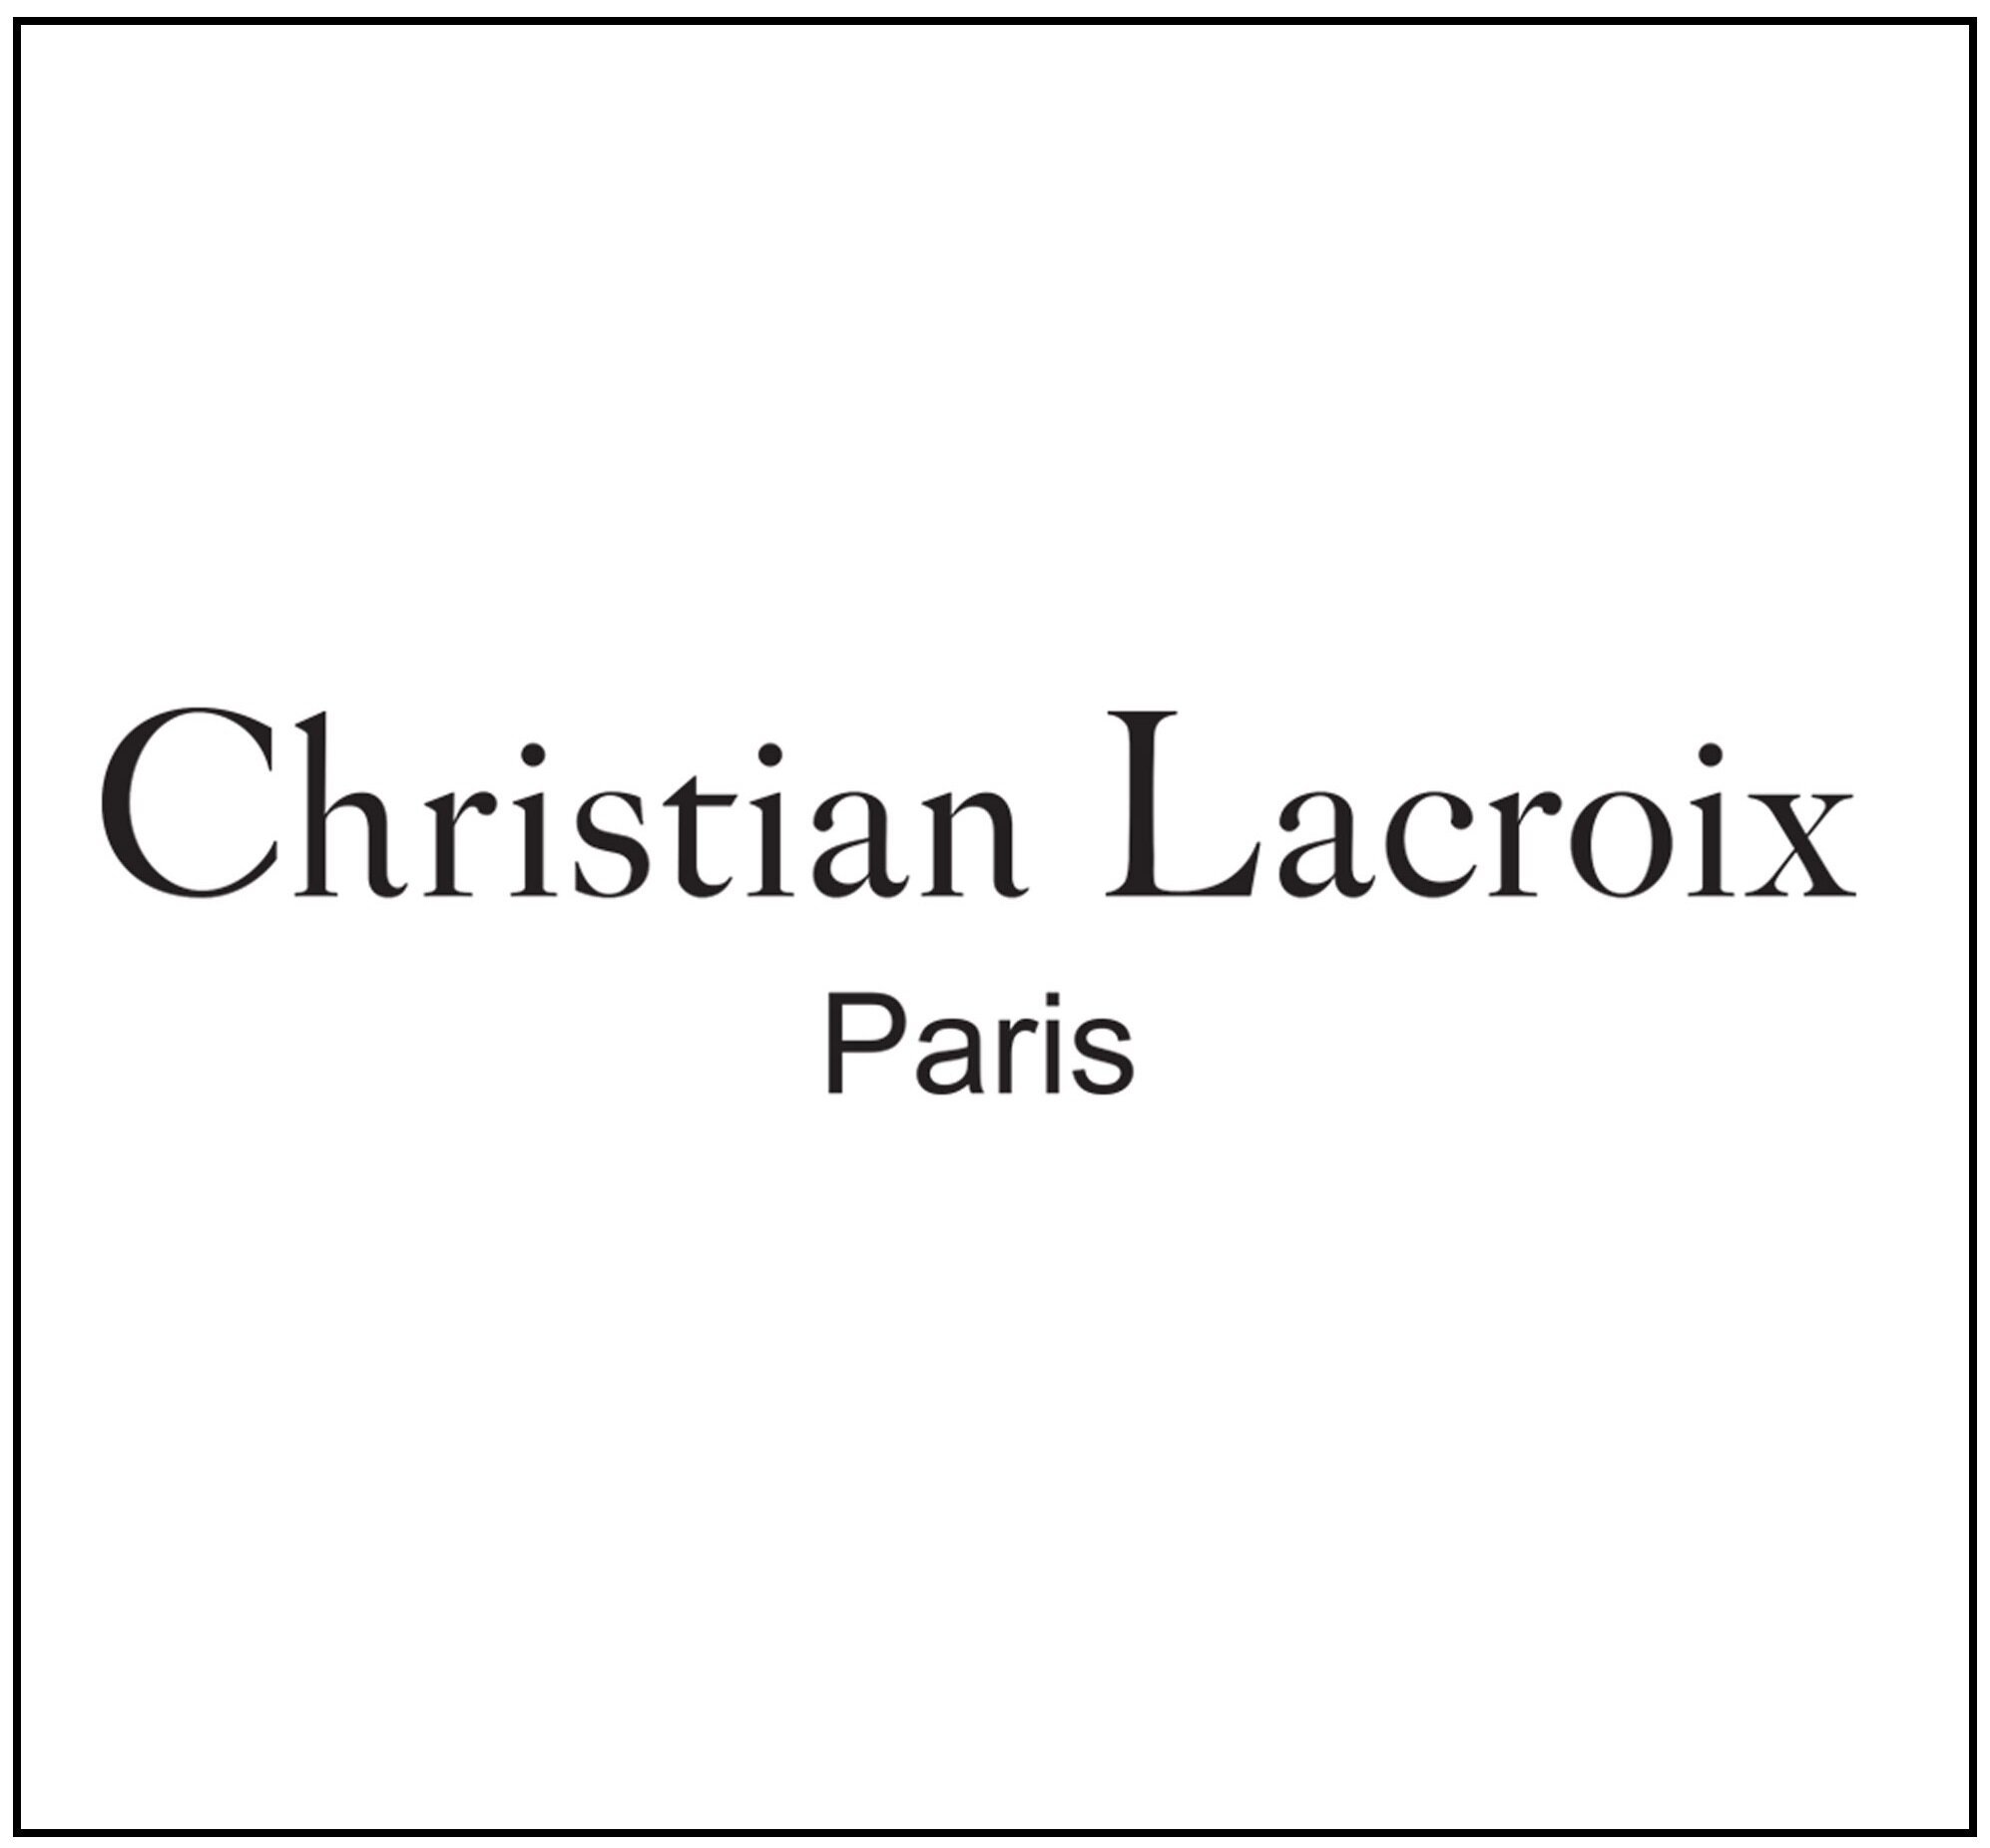 ChristianLacroix.jpg